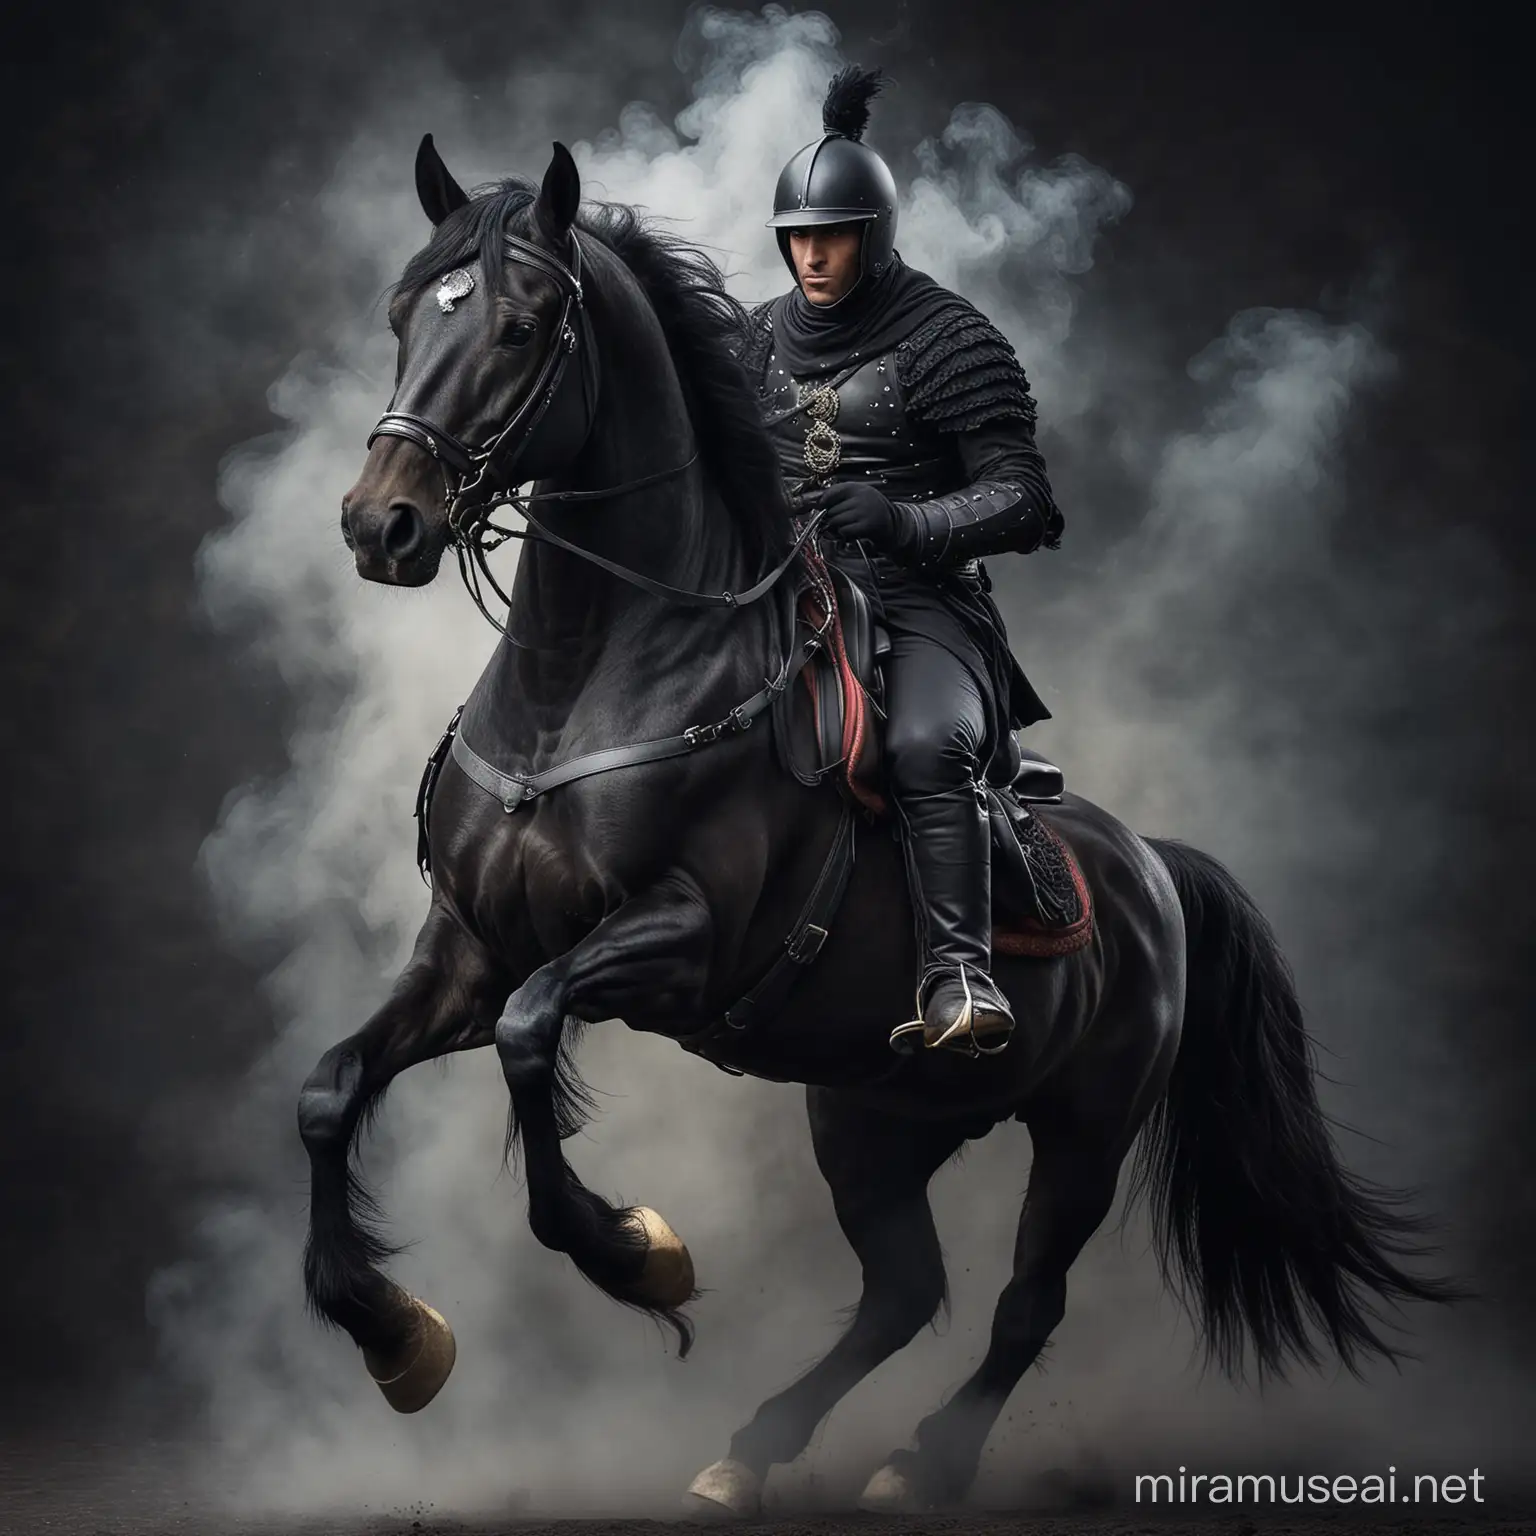 Dark Knight Riding Black Horse Through Smoky Atmosphere